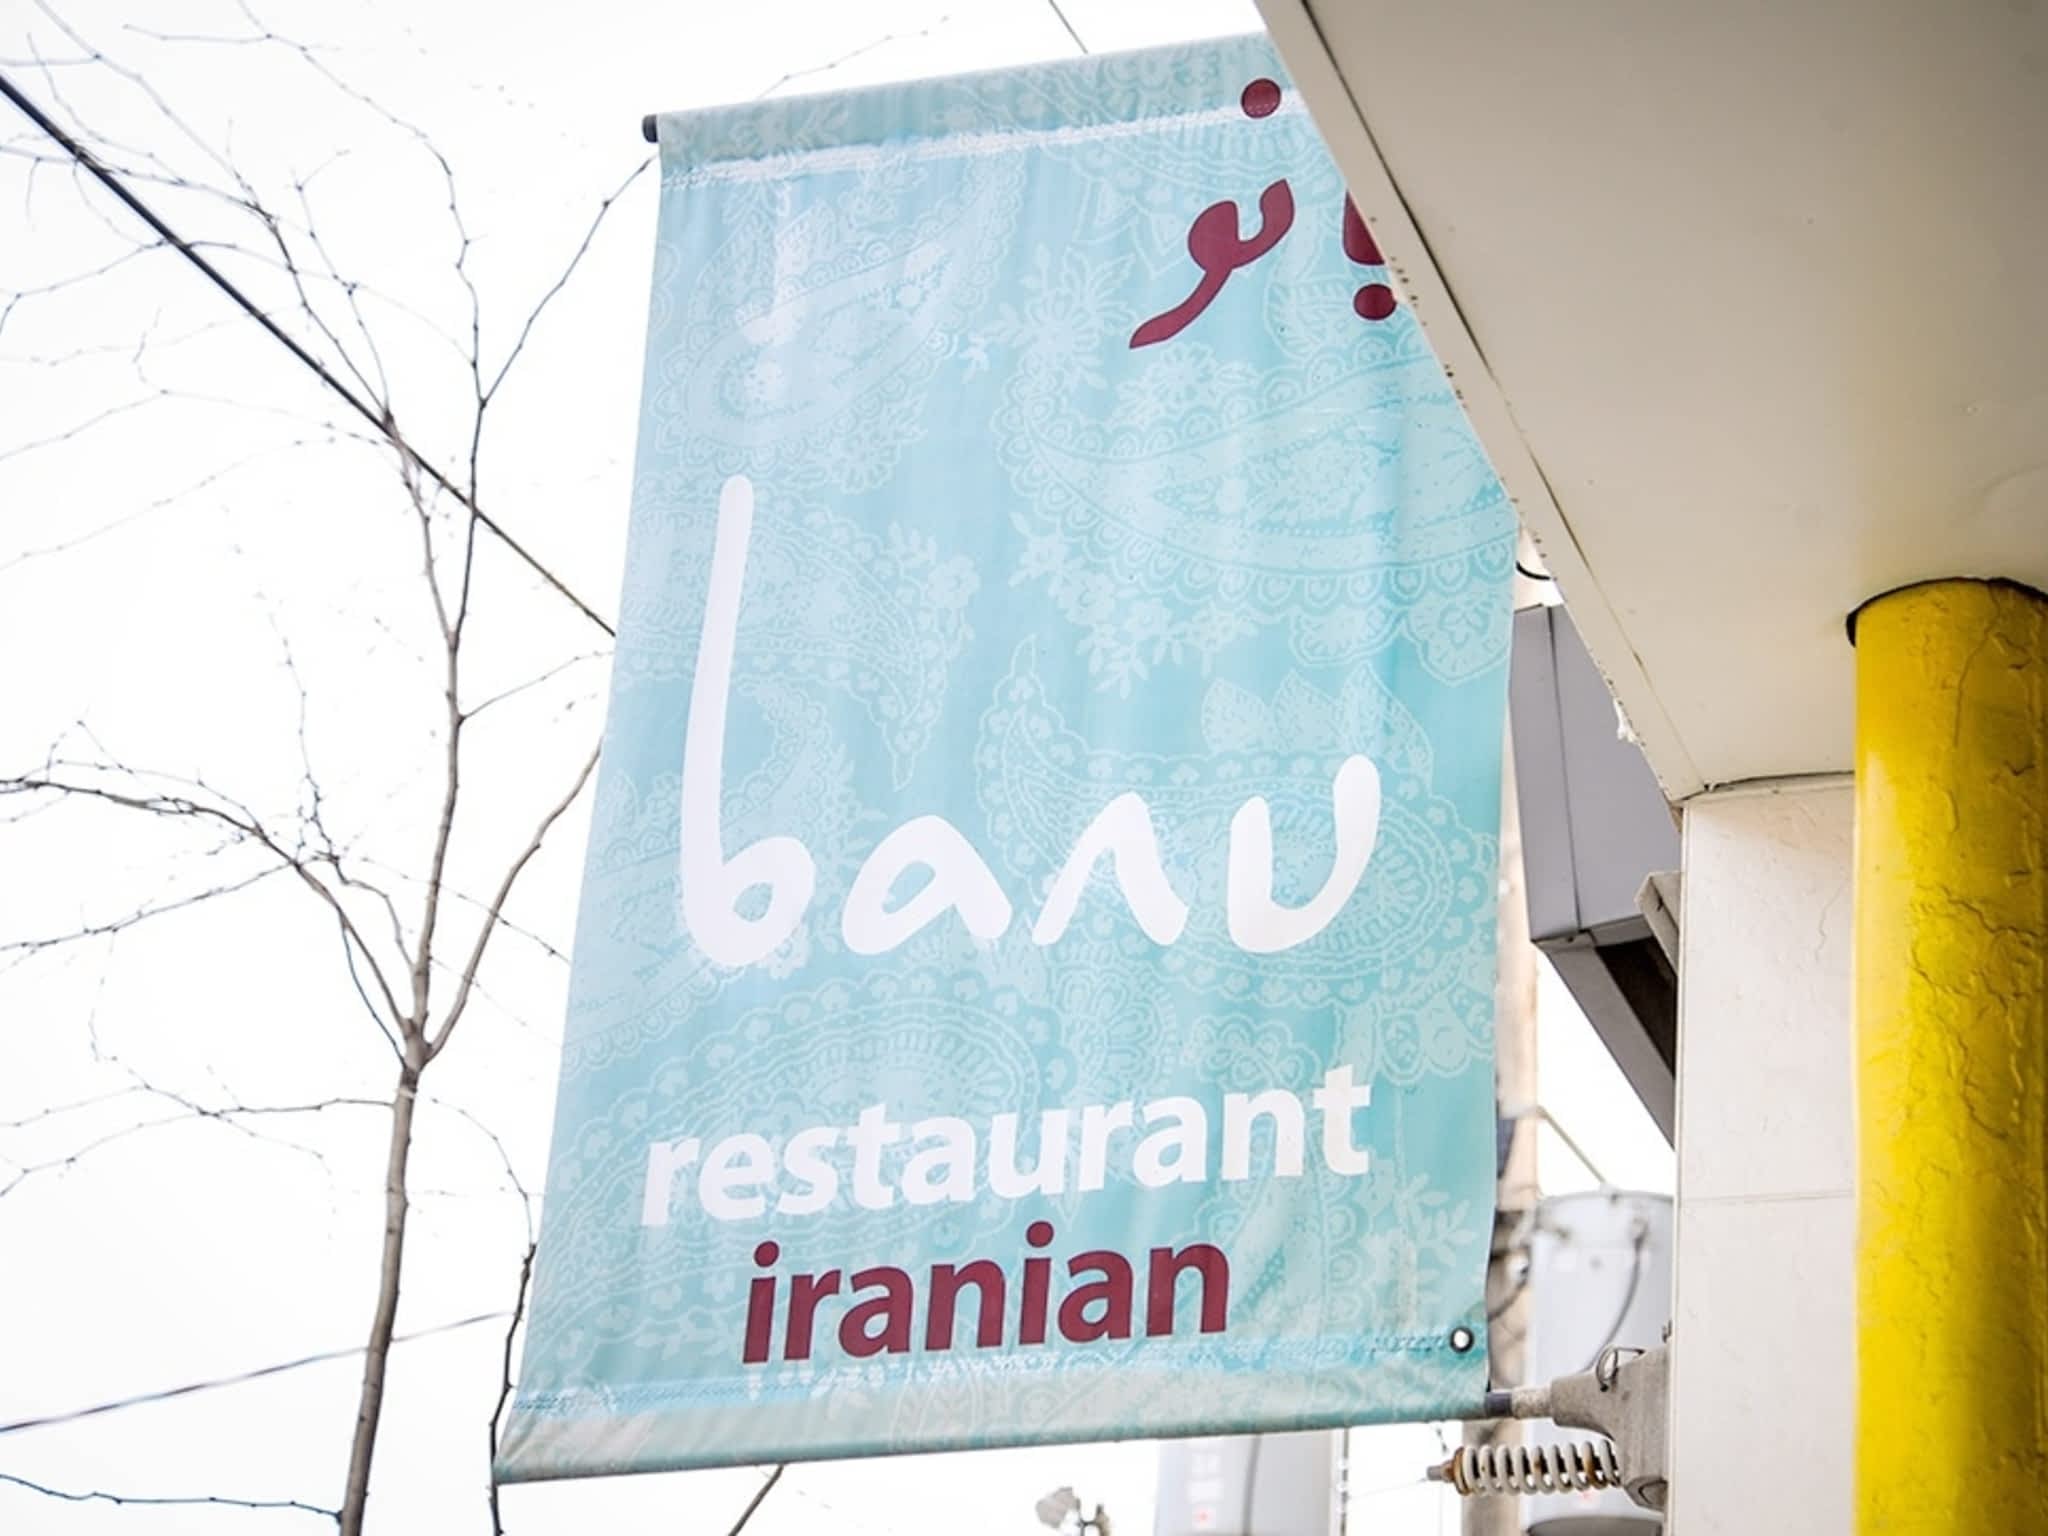 photo Banu Restaurant Iranian